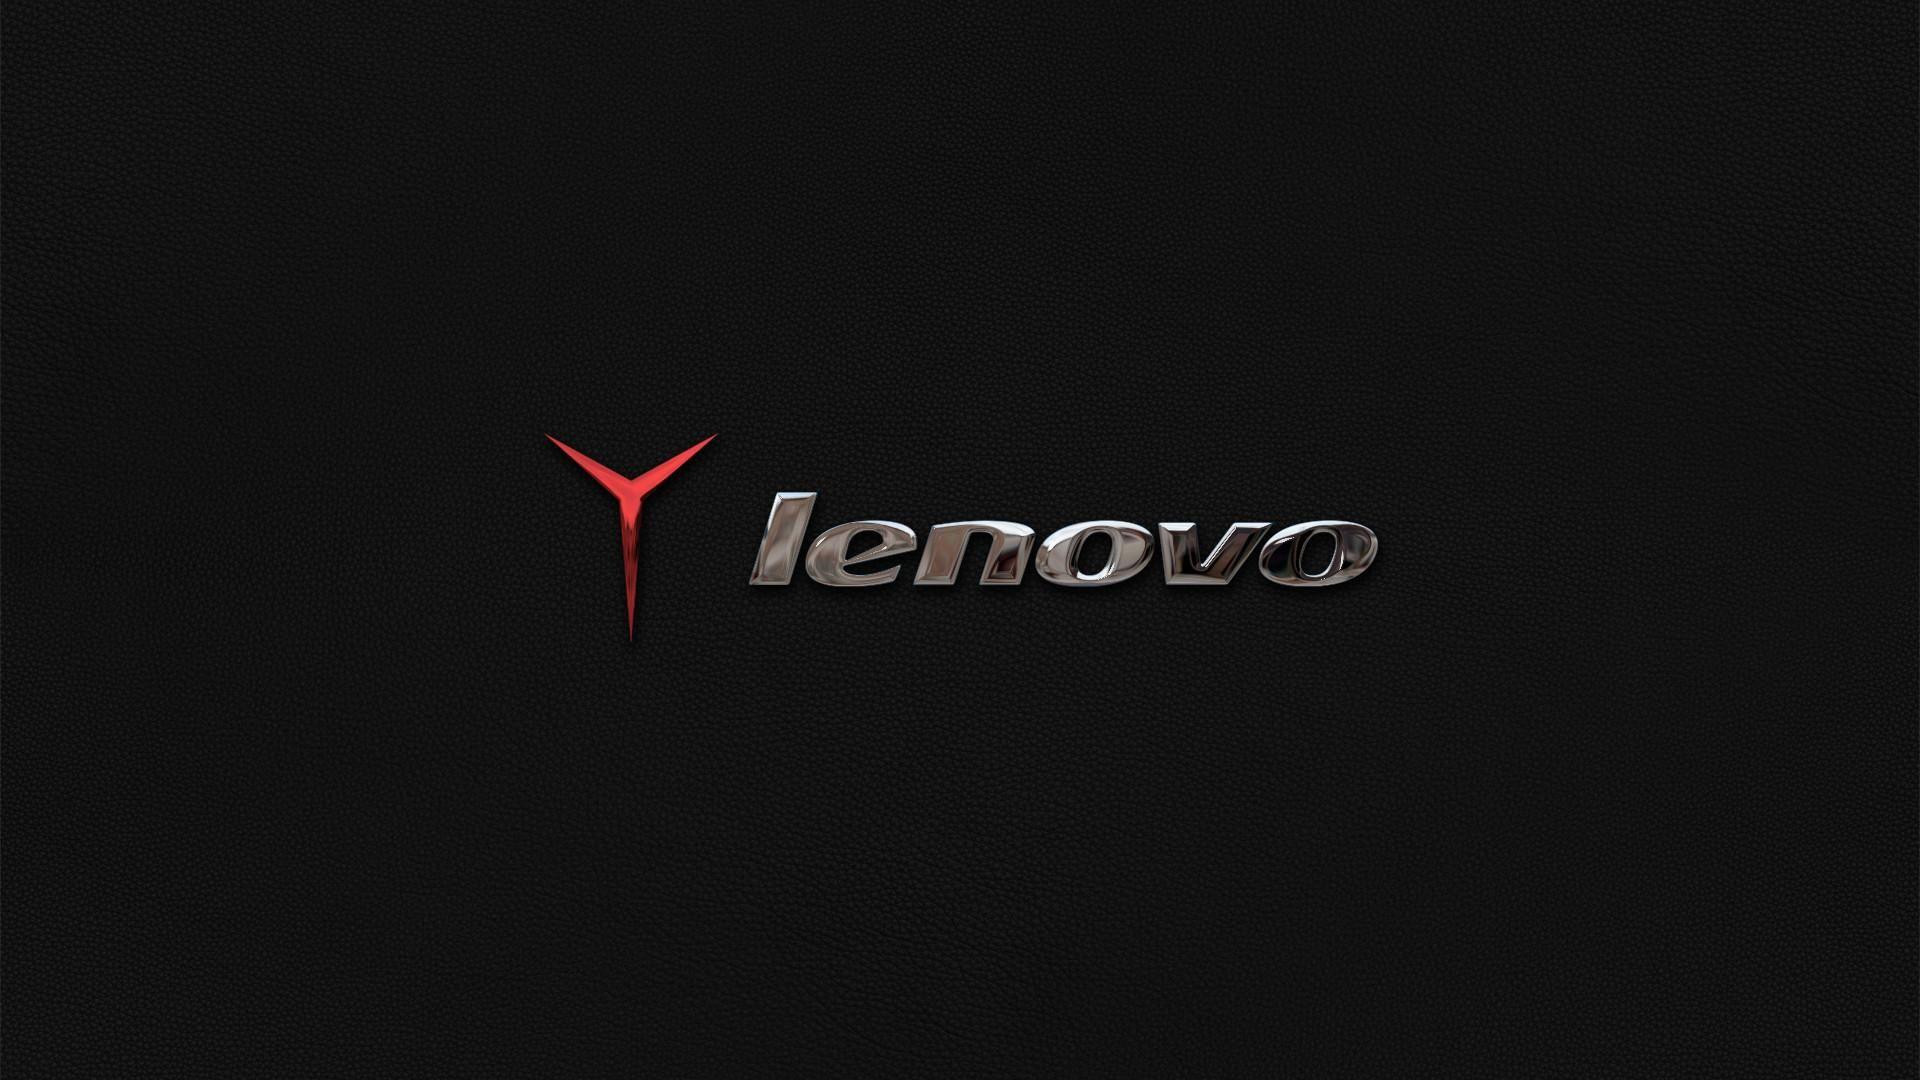 Lenovo Full HD Wallpapers - Top Free Lenovo Full HD Backgrounds